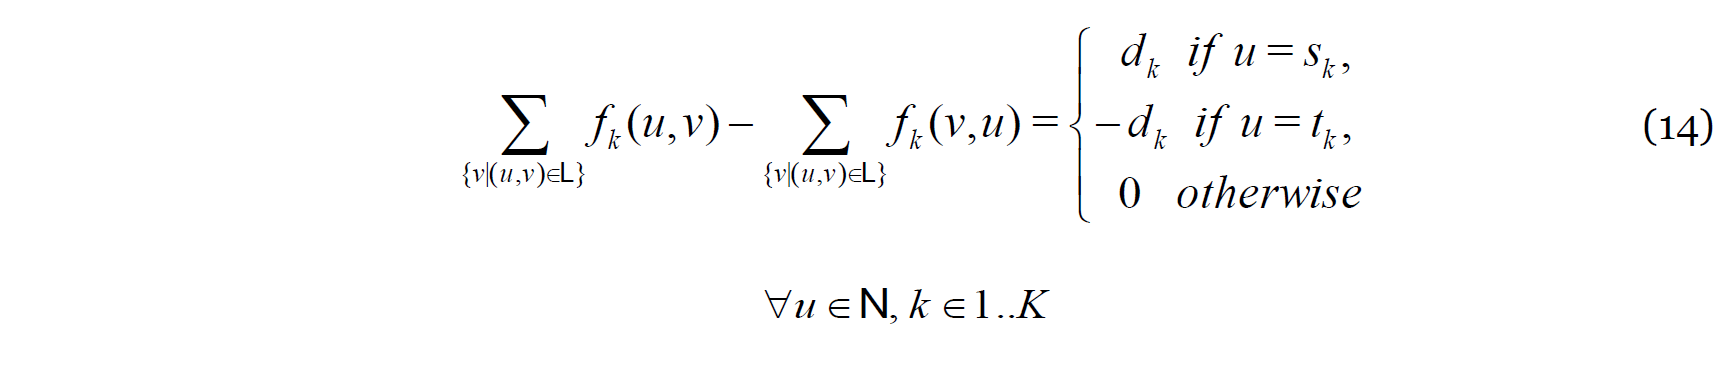 Optimisation problem equations